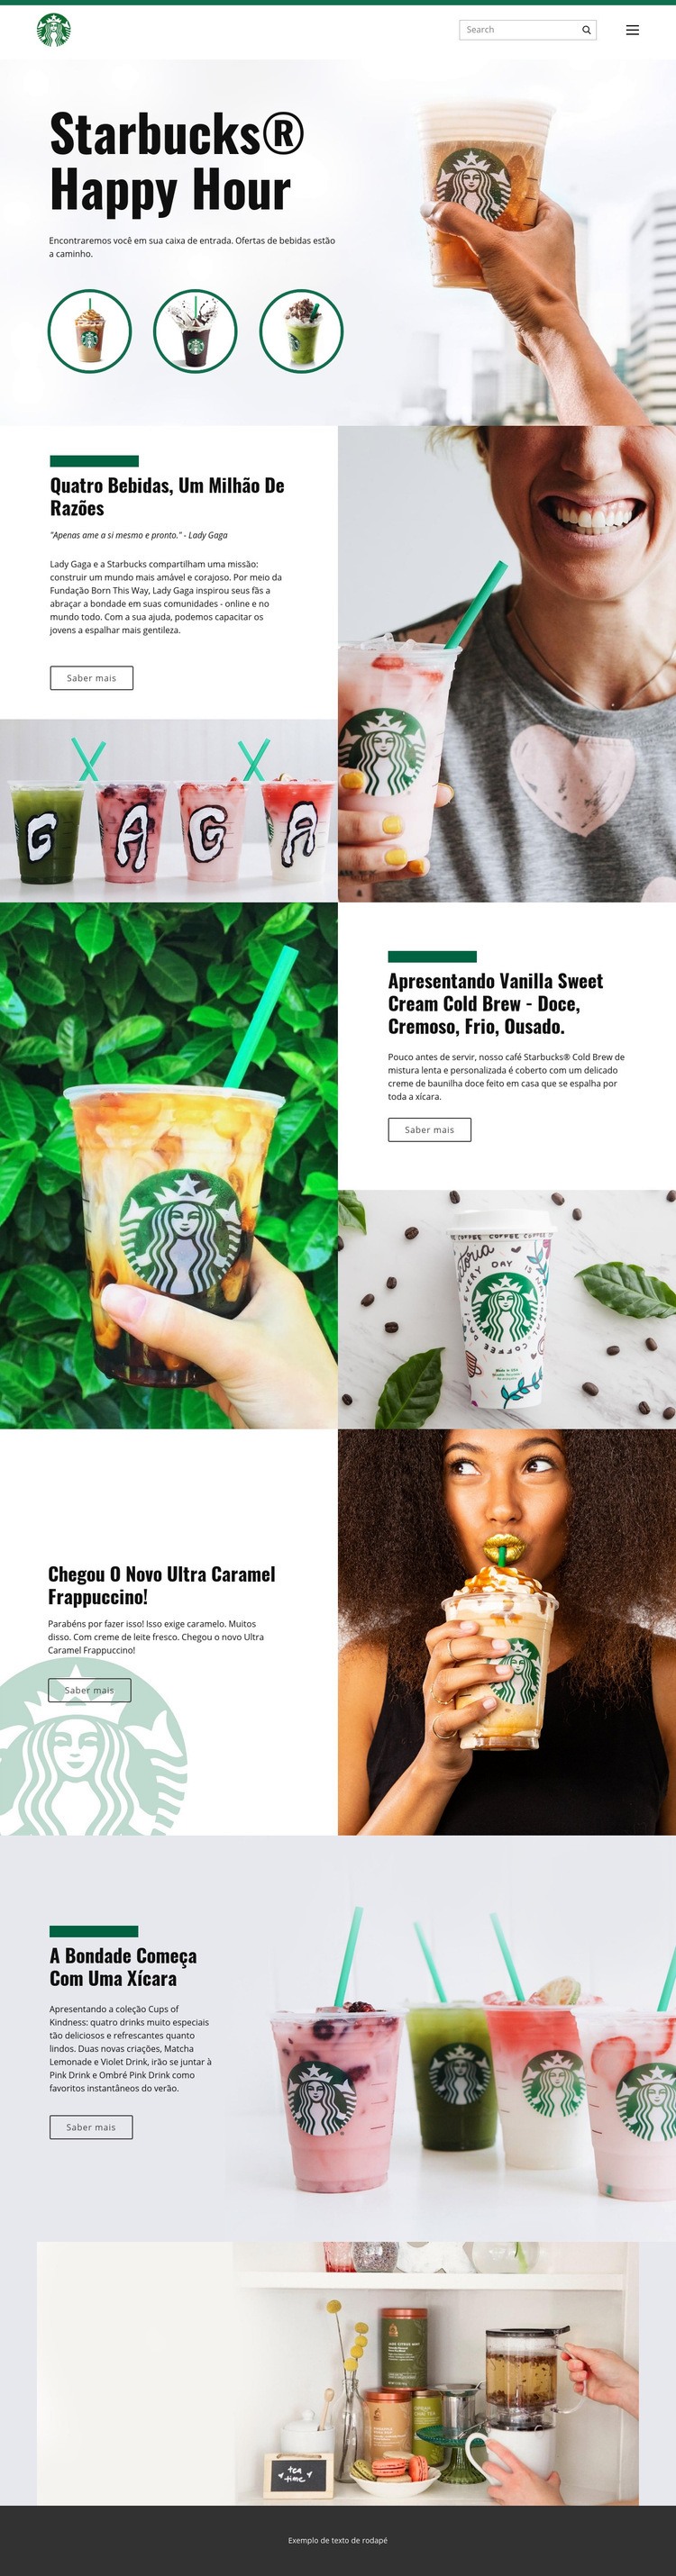 Café Starbucks Landing Page